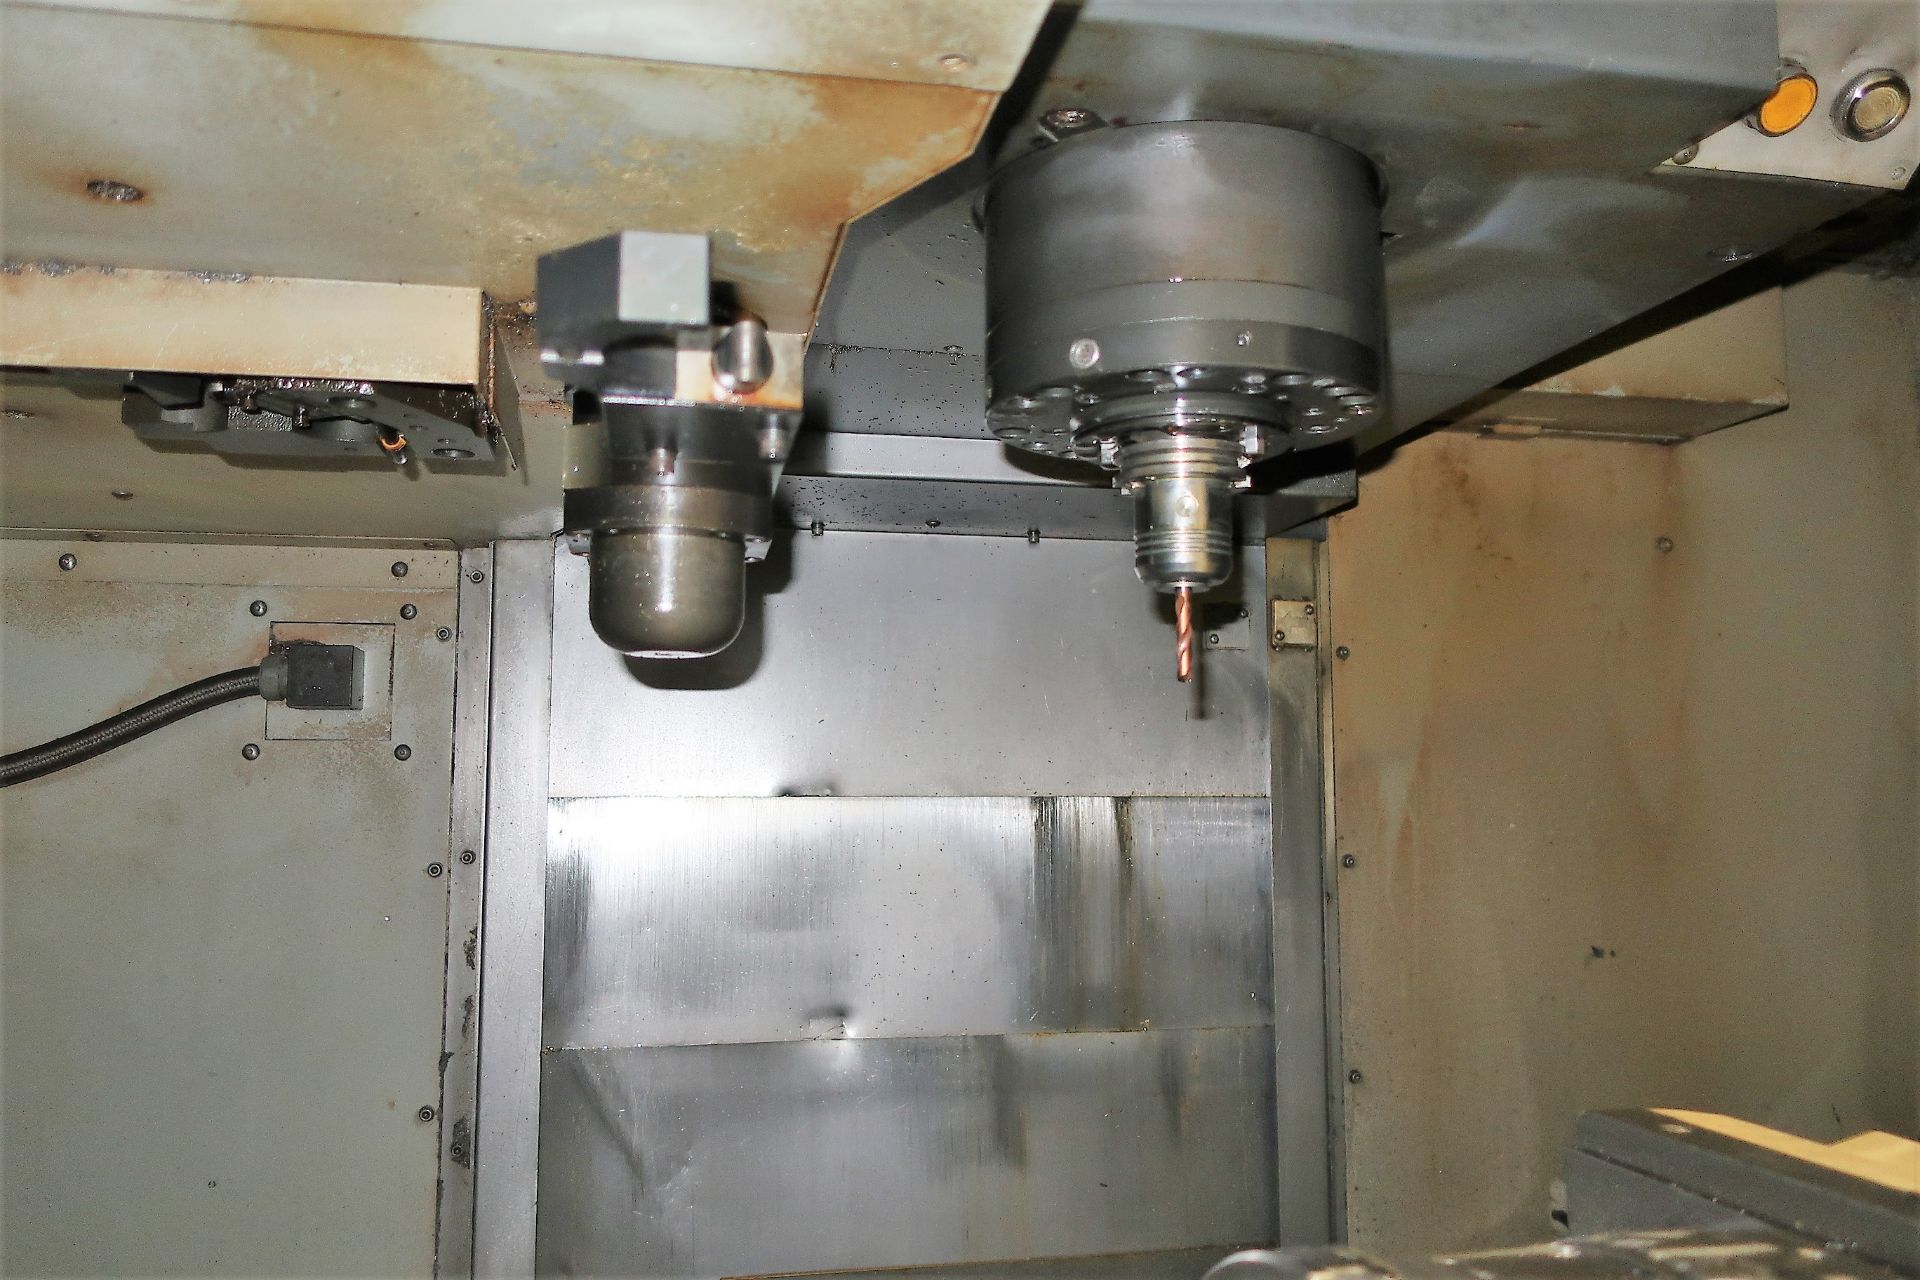 MORI SEIKI NV5000A/40 4-AXIS CNC VERTICAL MACHINING CENTER, SN NV501BF0338, NEW 2002 - Image 4 of 7